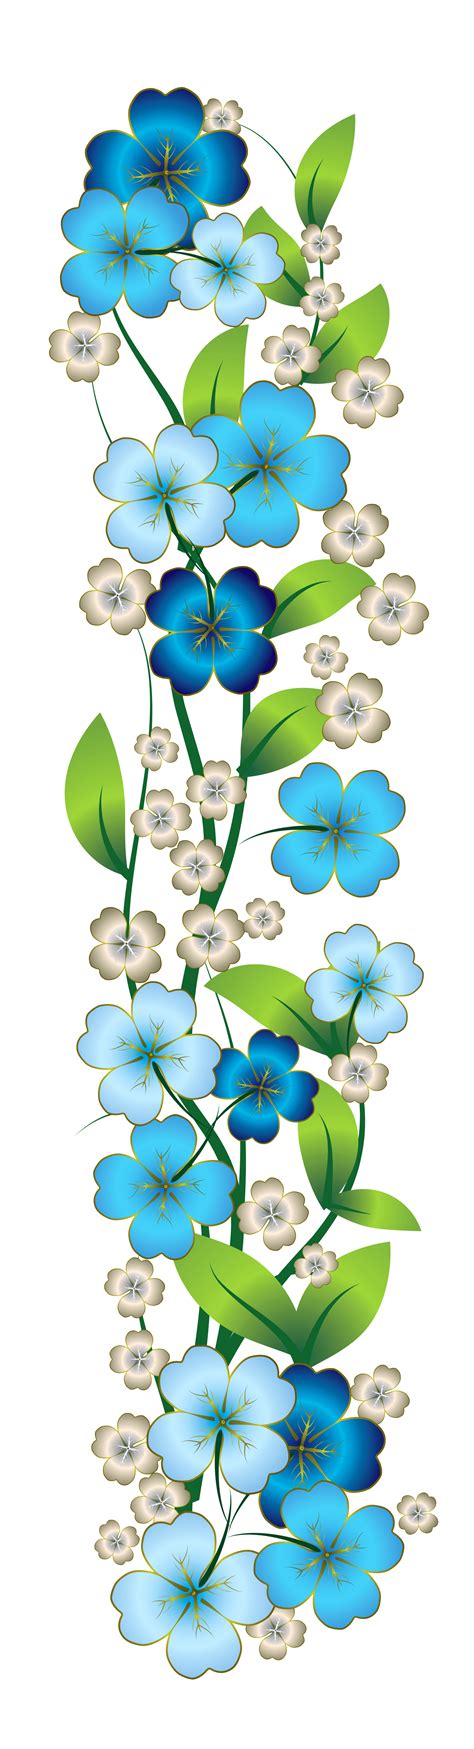 Blue Flower Png Blue Flowers Flower Art Cactus Flower Flower Images